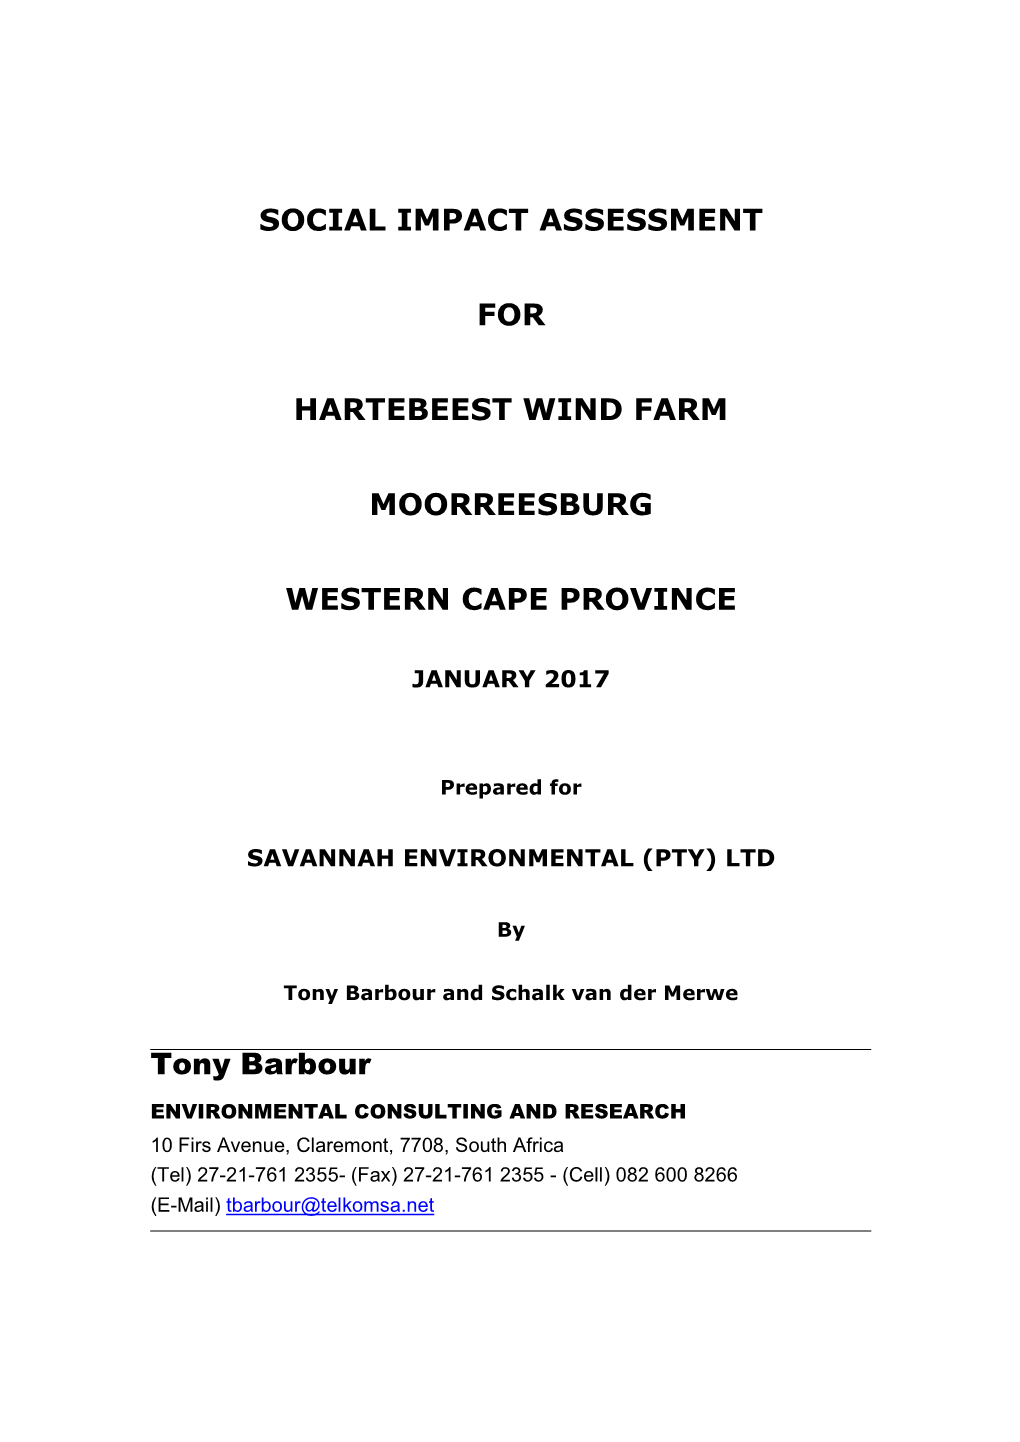 Social Impact Assessment for Hartebeest Wind Farm Moorreesburg